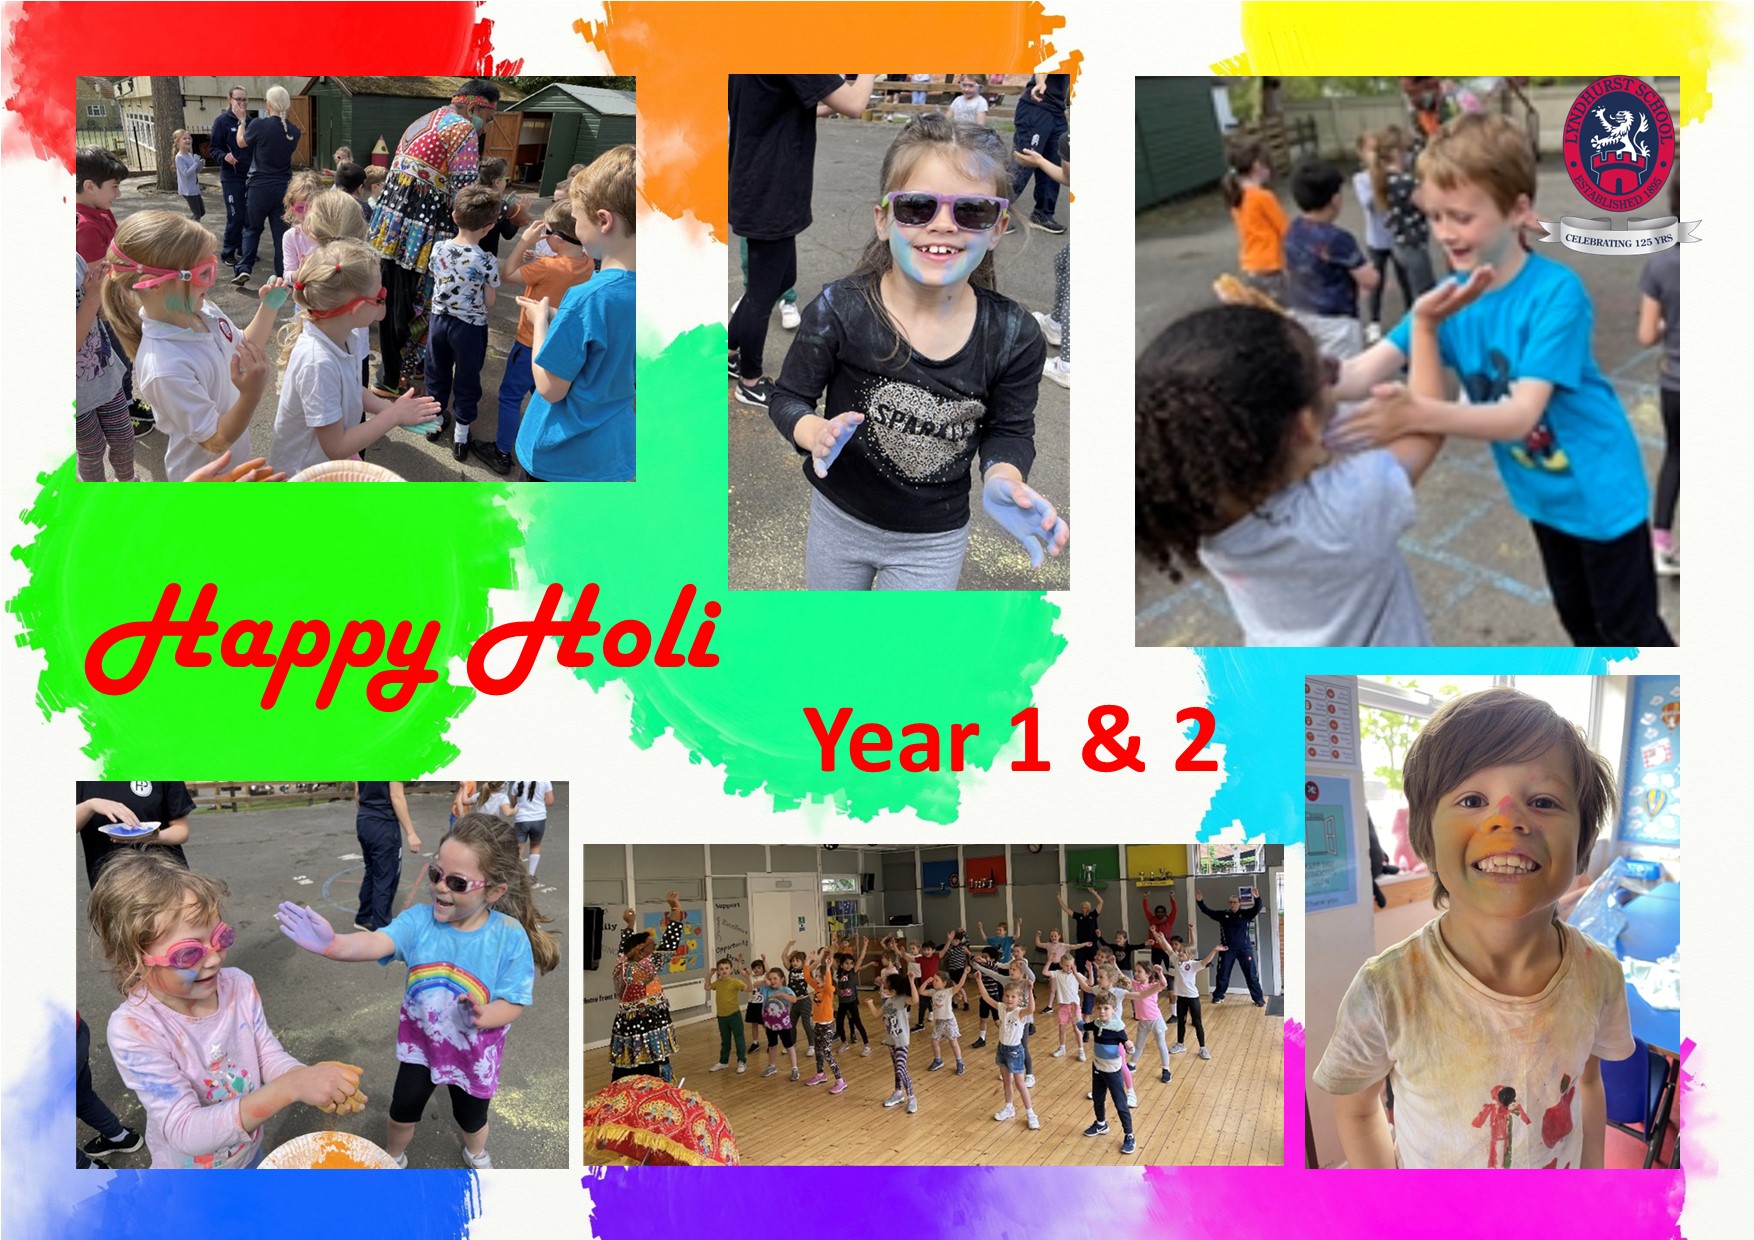 Year 1 & 2; Happy Holi!